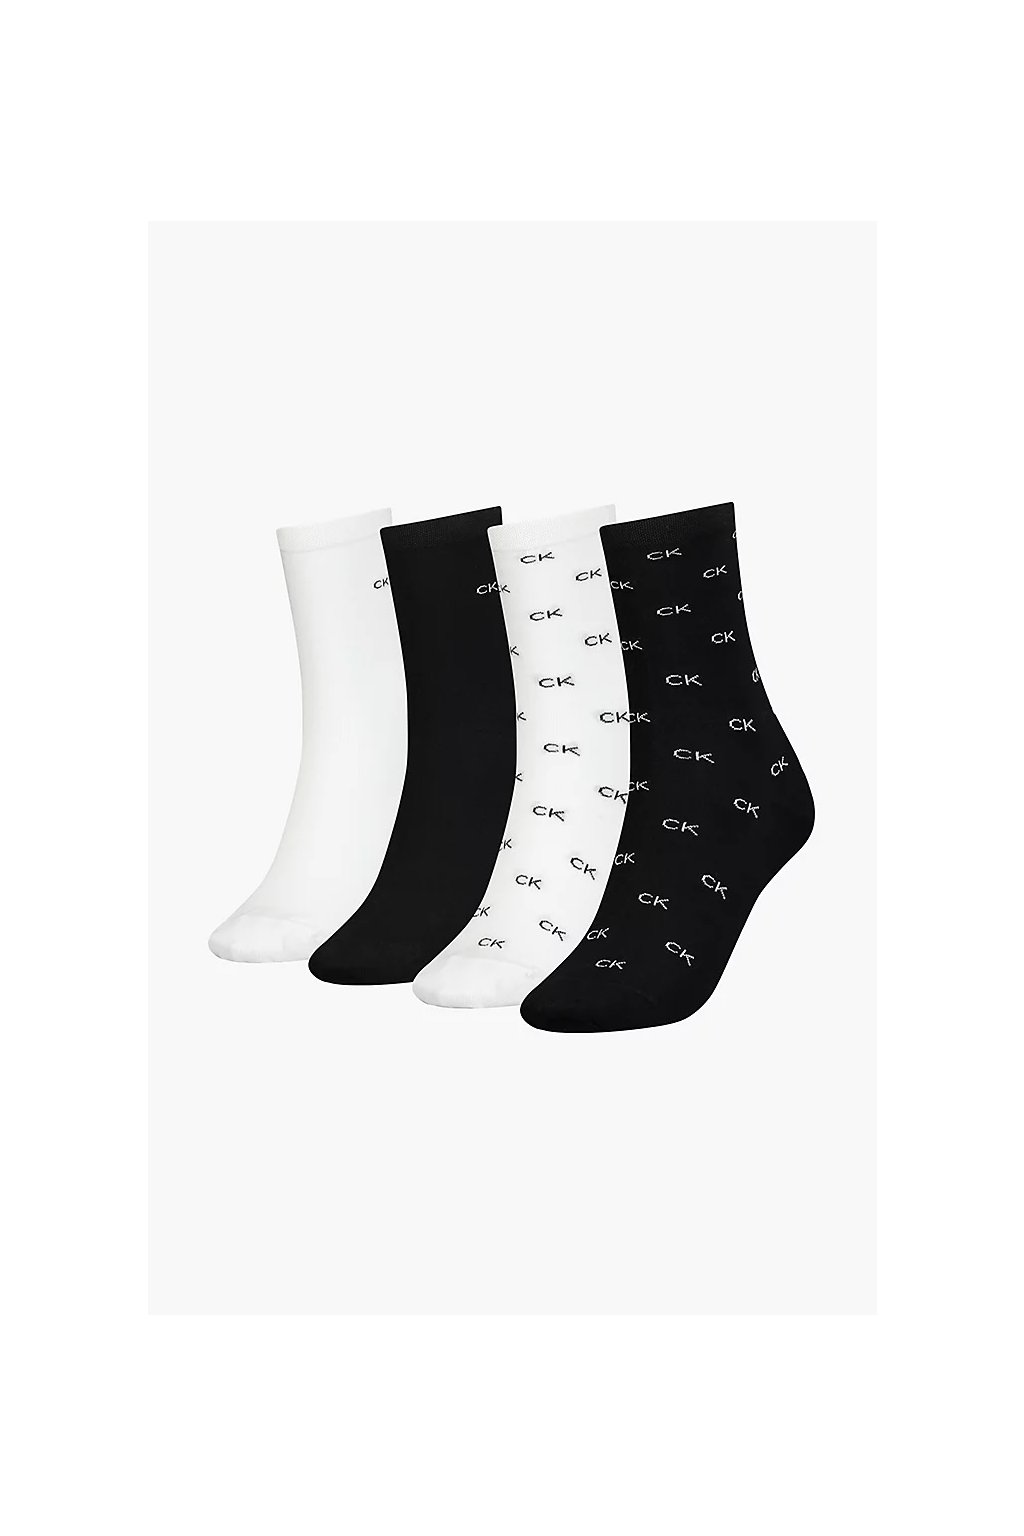 Calvin Klein 4 páry ponožek dámské  - bílá, černá